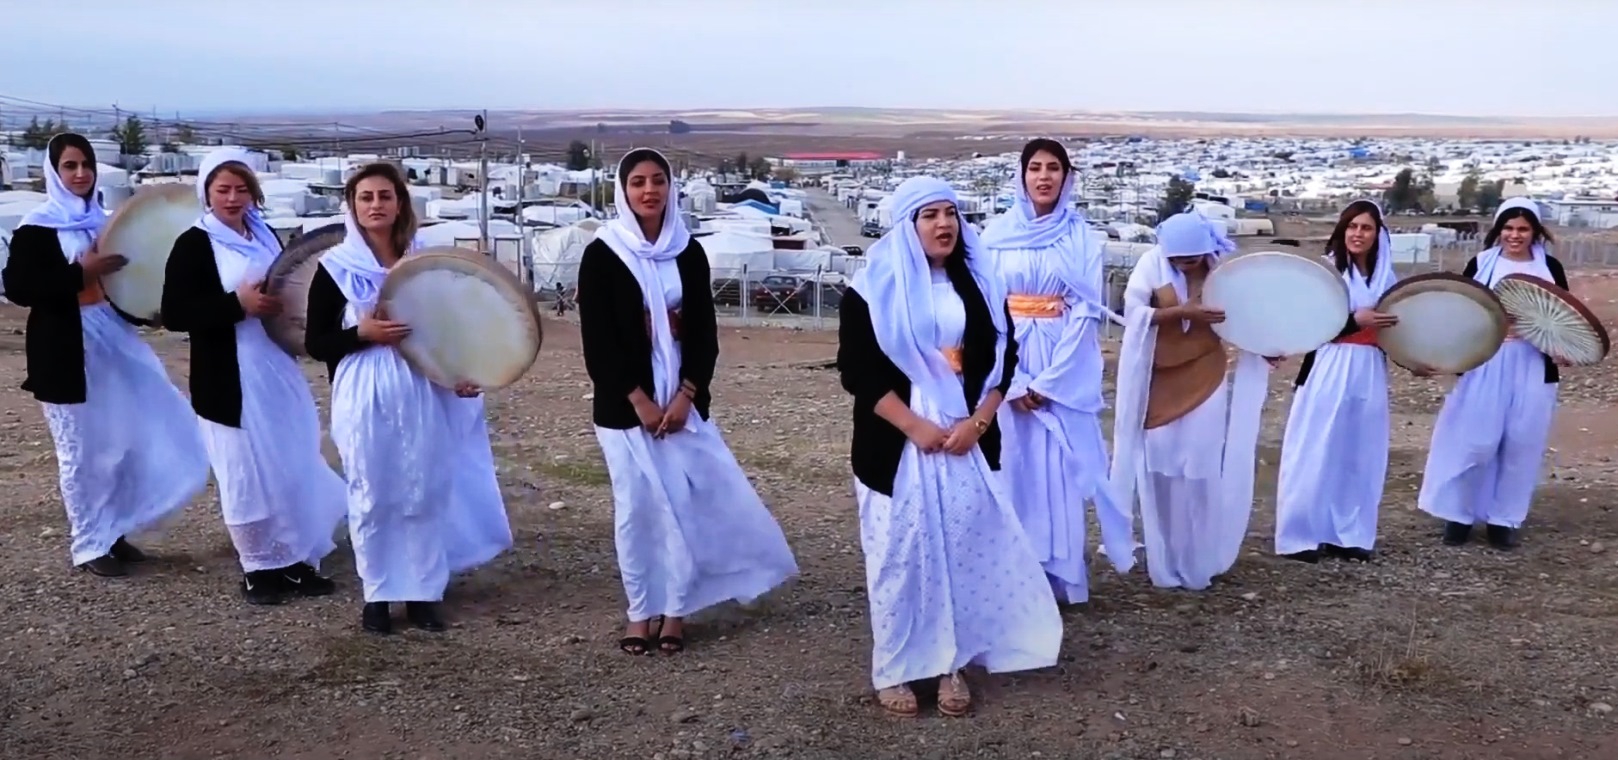 شابات ايزيديات يتحدين داعش بالموسيقى: لن ننكسر أبداً